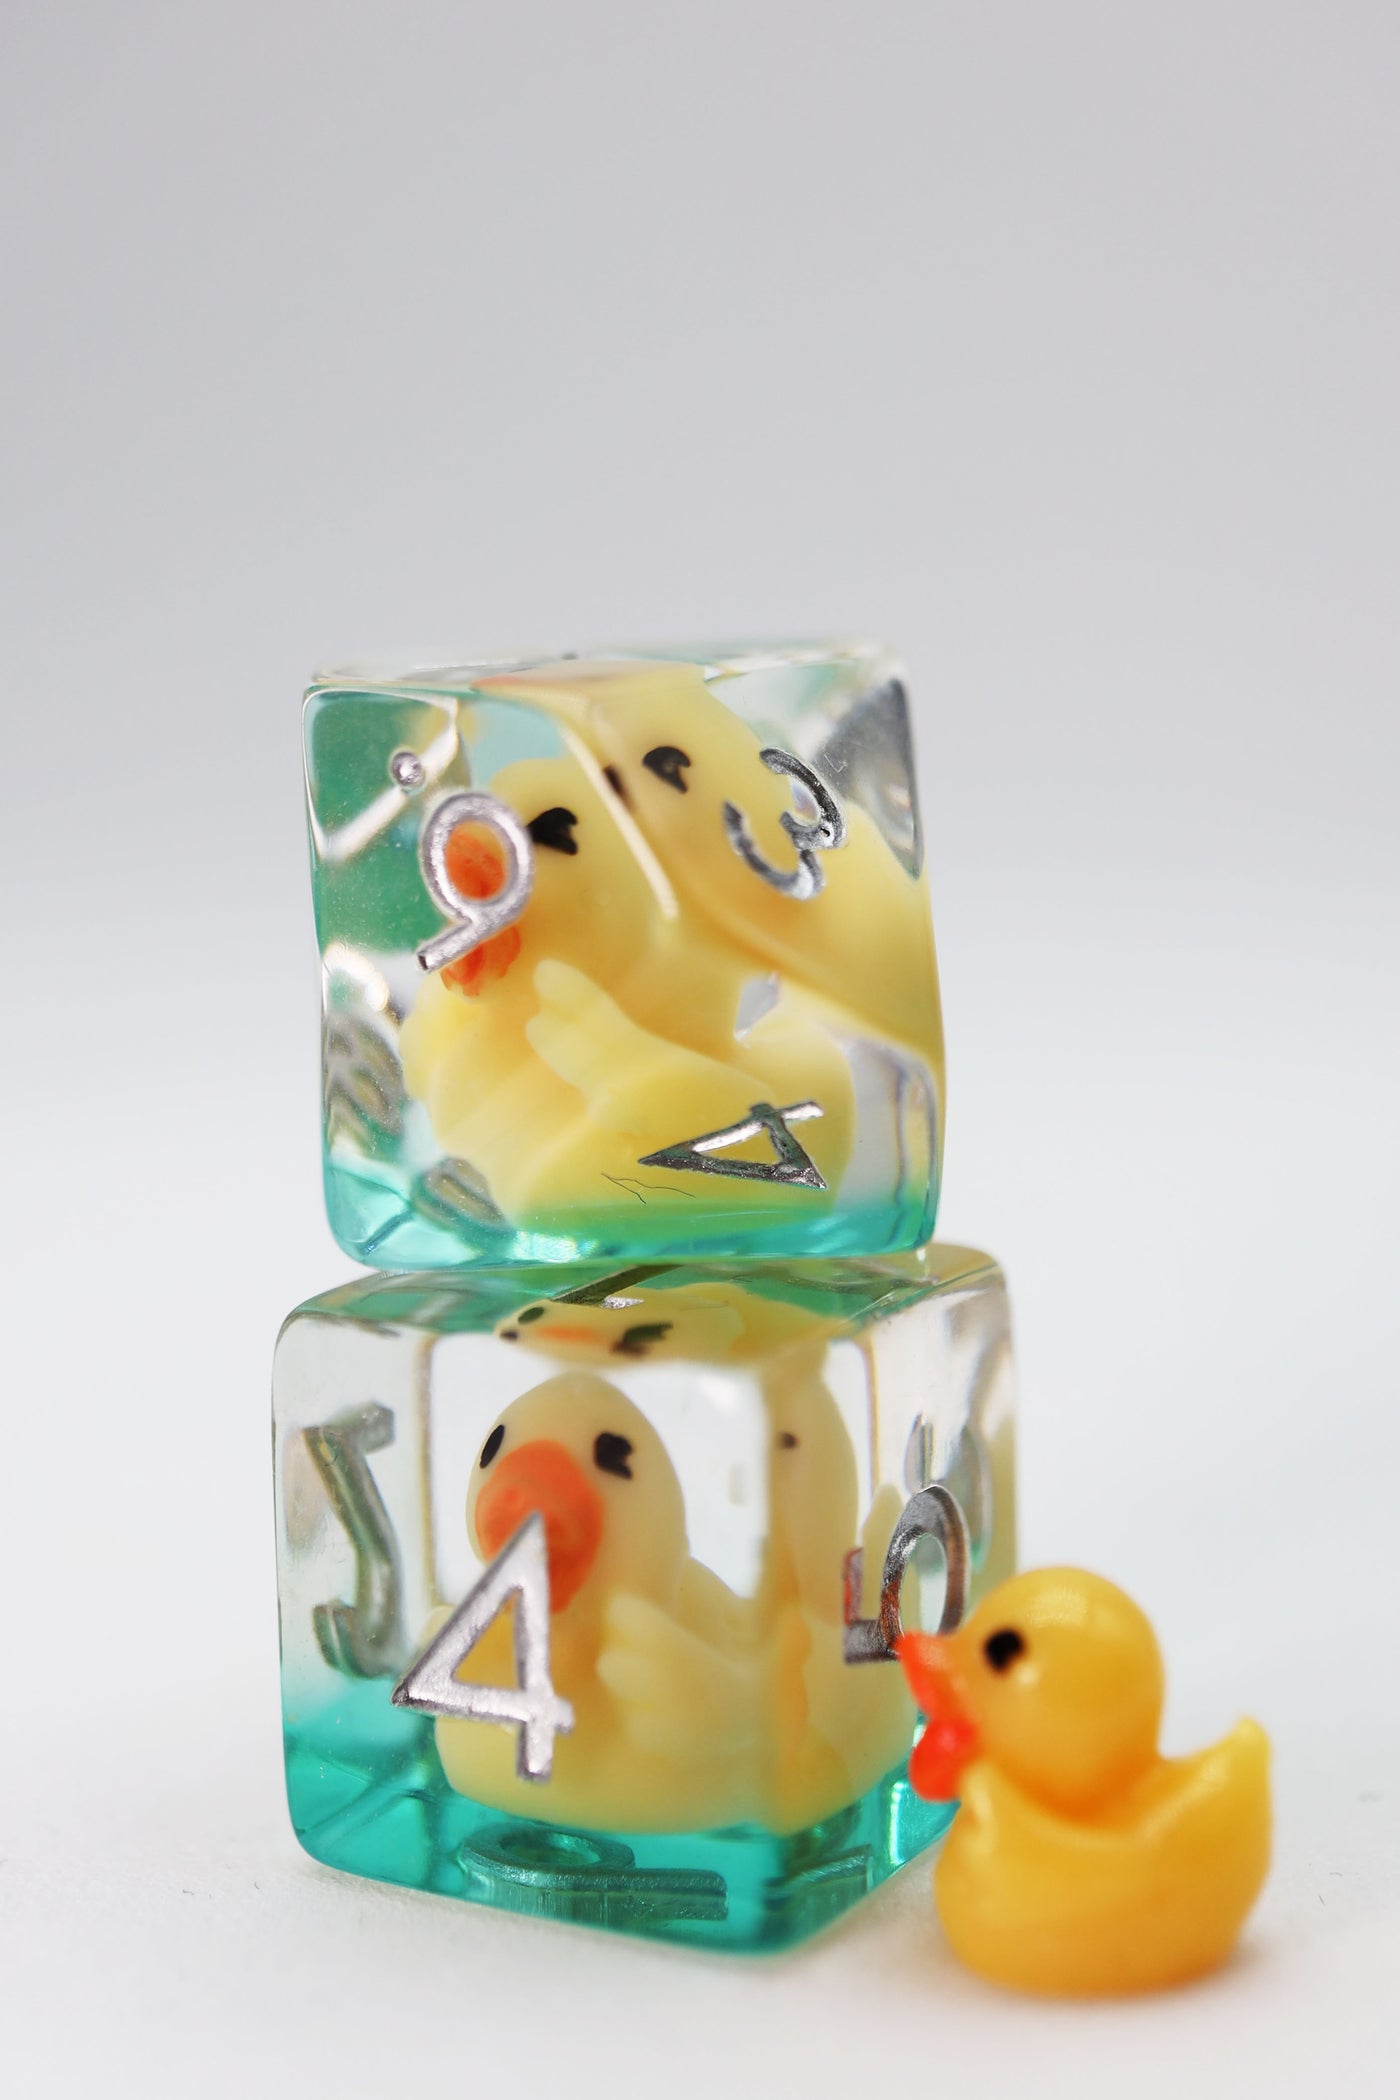 Rubber Duckie RPG Dice Set Plastic Dice Foam Brain Games